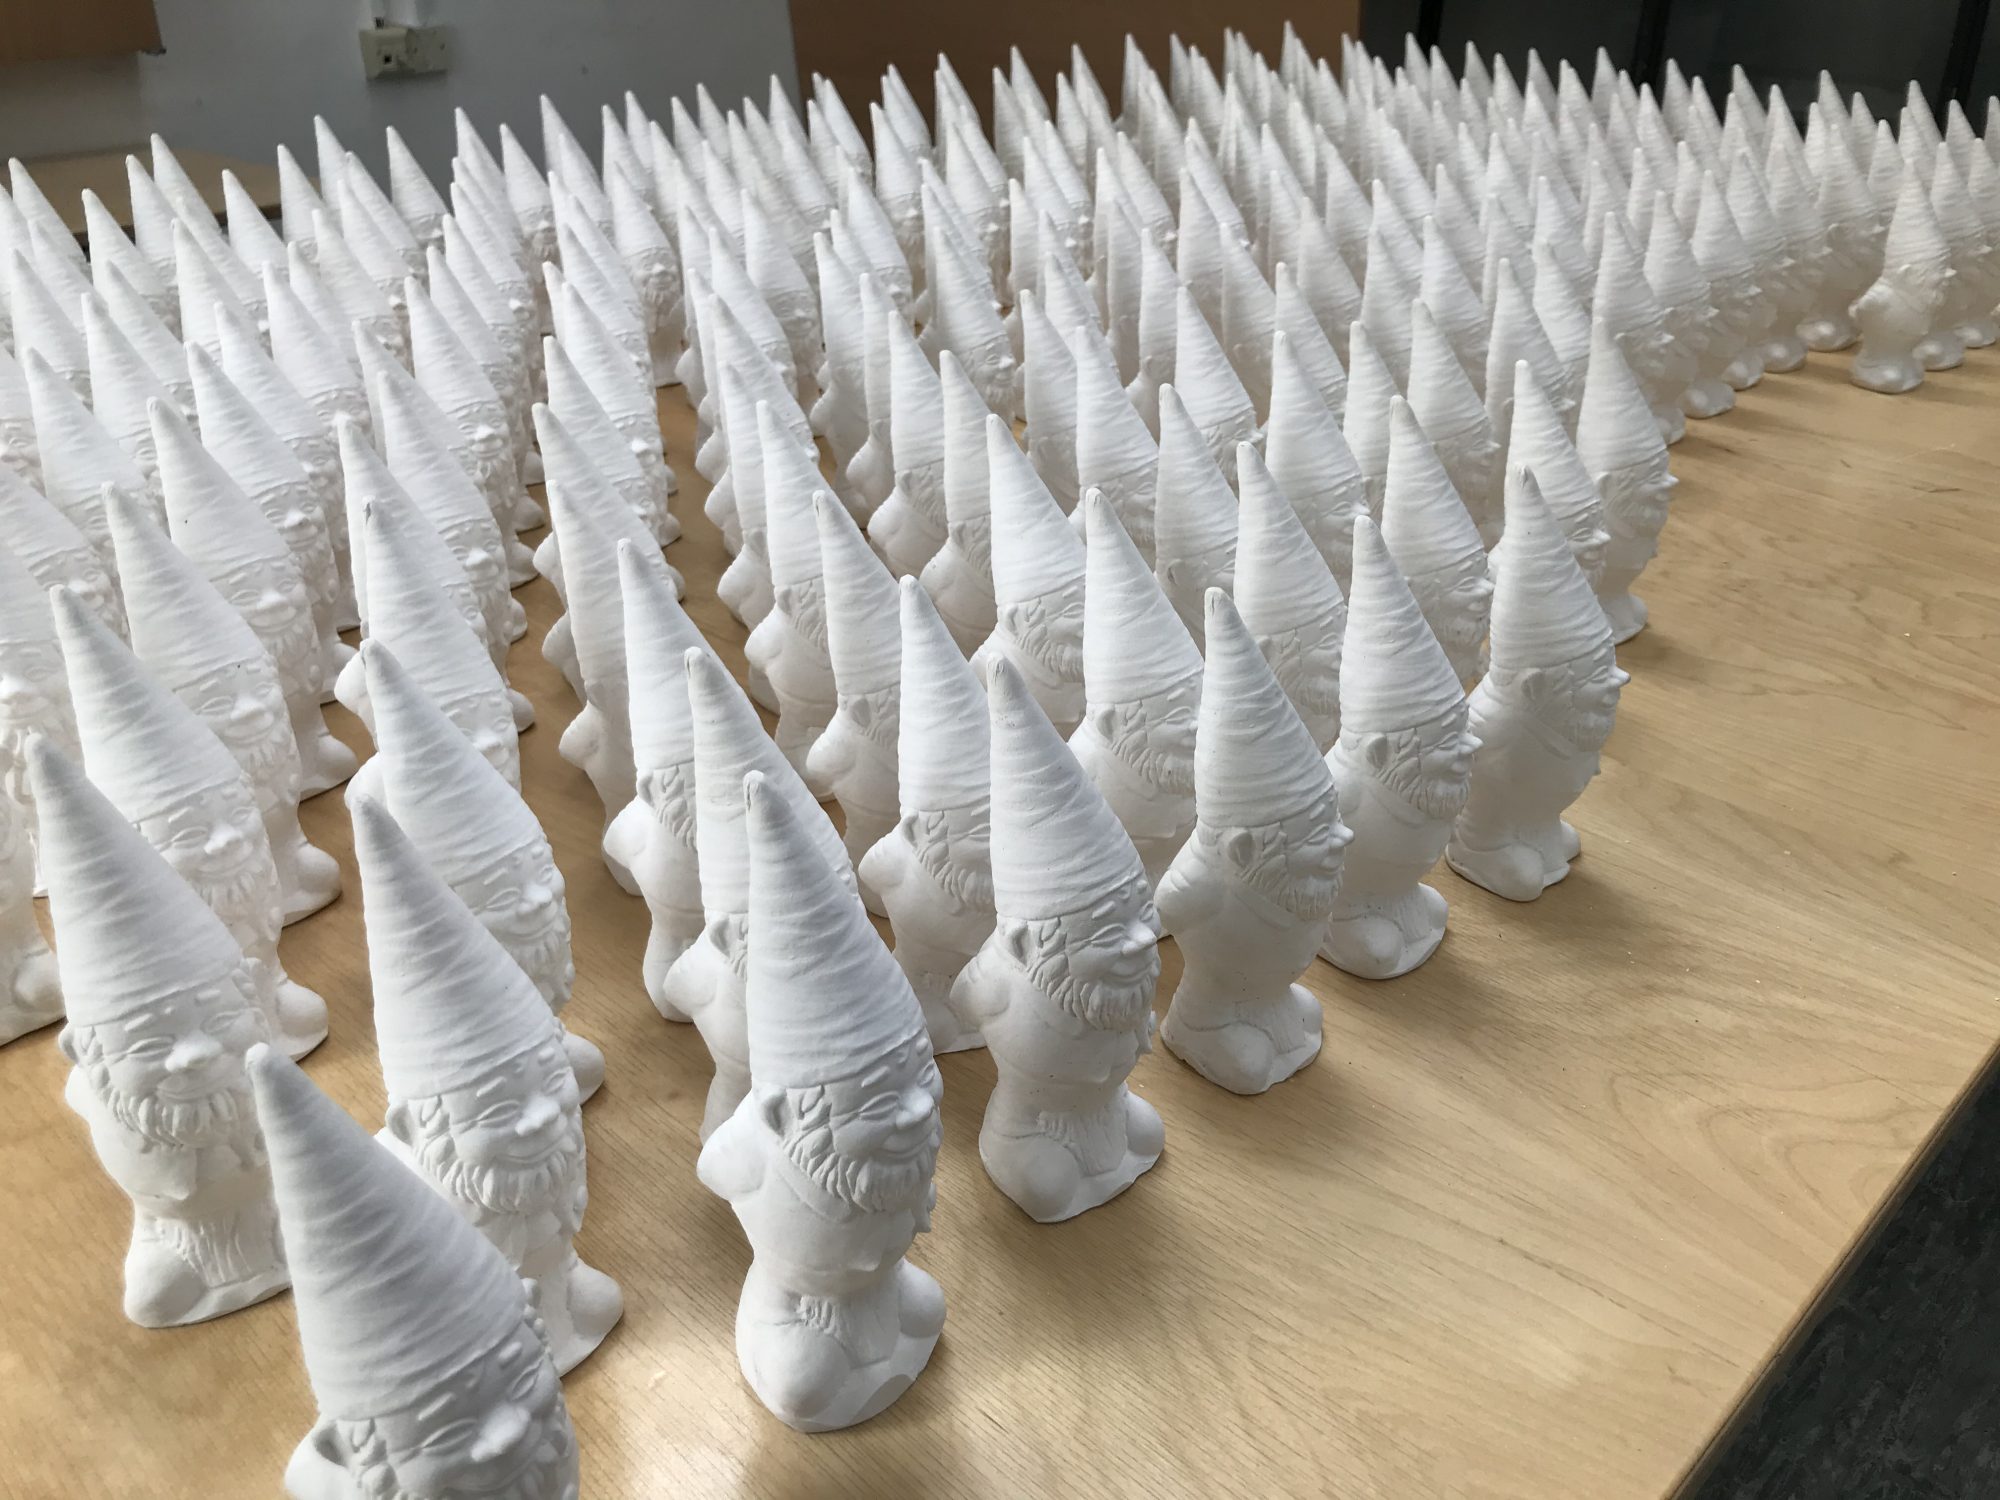 250 plaster cast gnomes